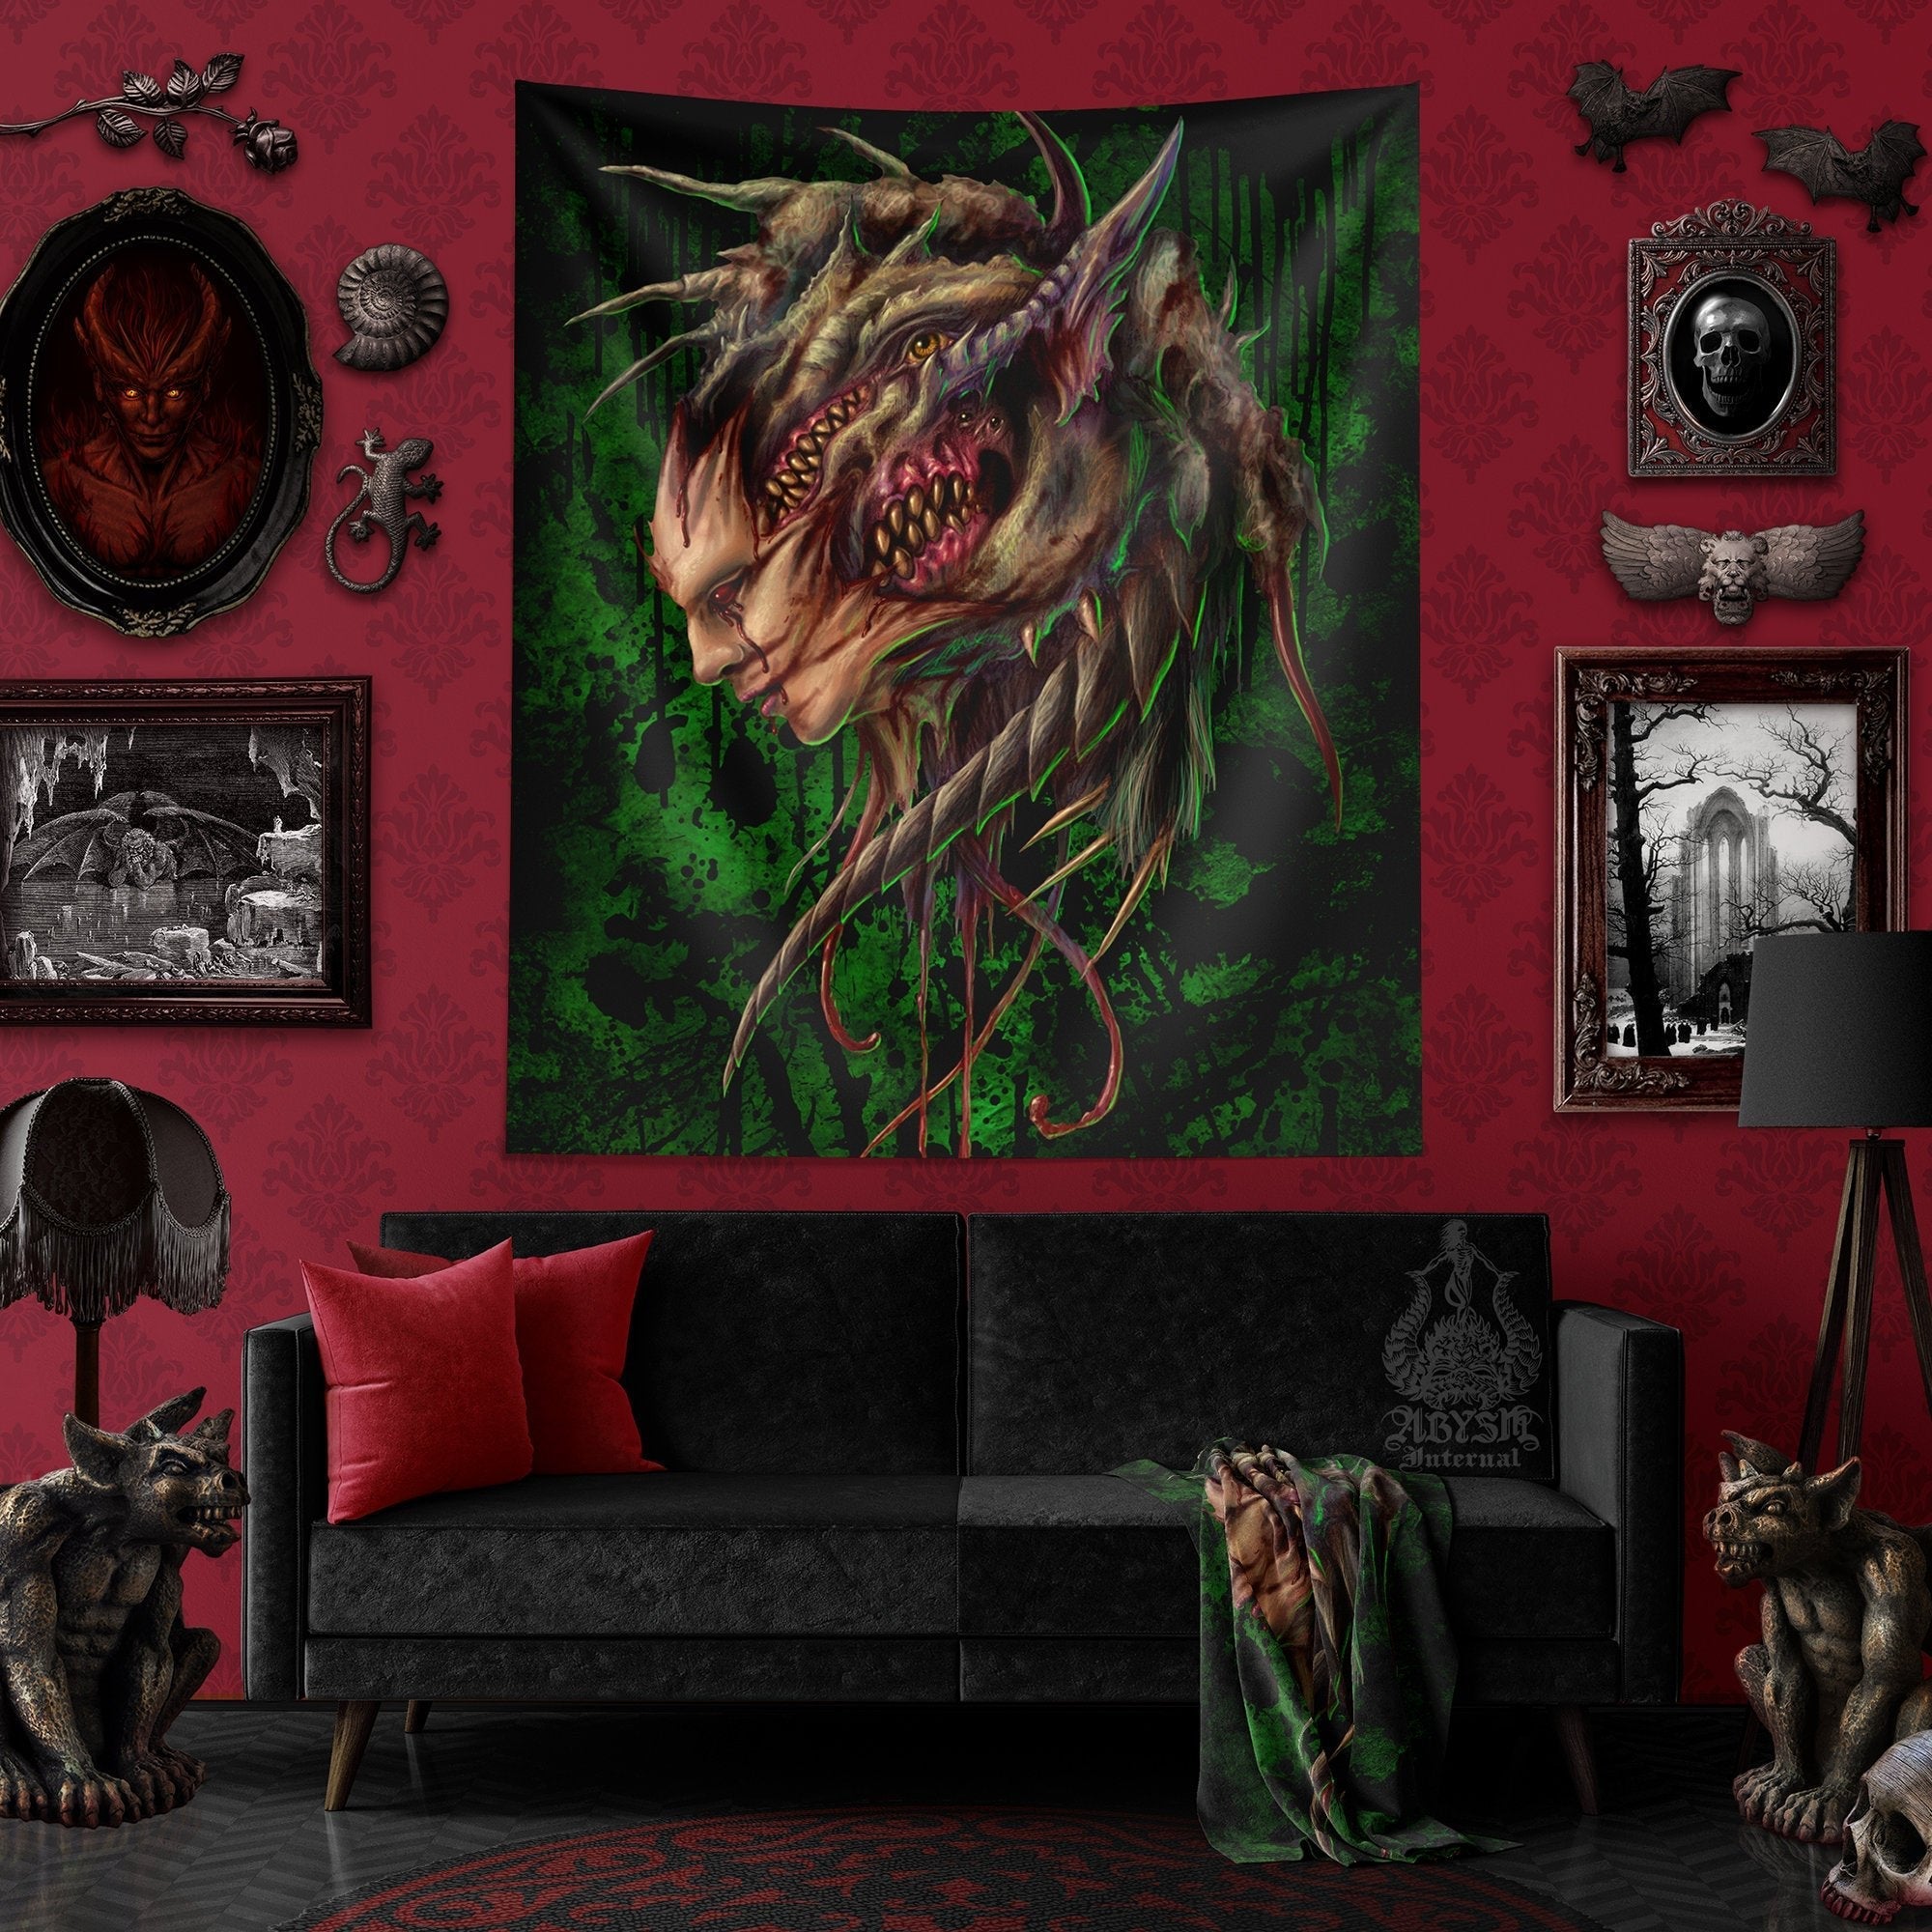 Monster Tapestry, Horror Wall Hanging, Halloween Home Decor, Art Print - Green - Abysm Internal